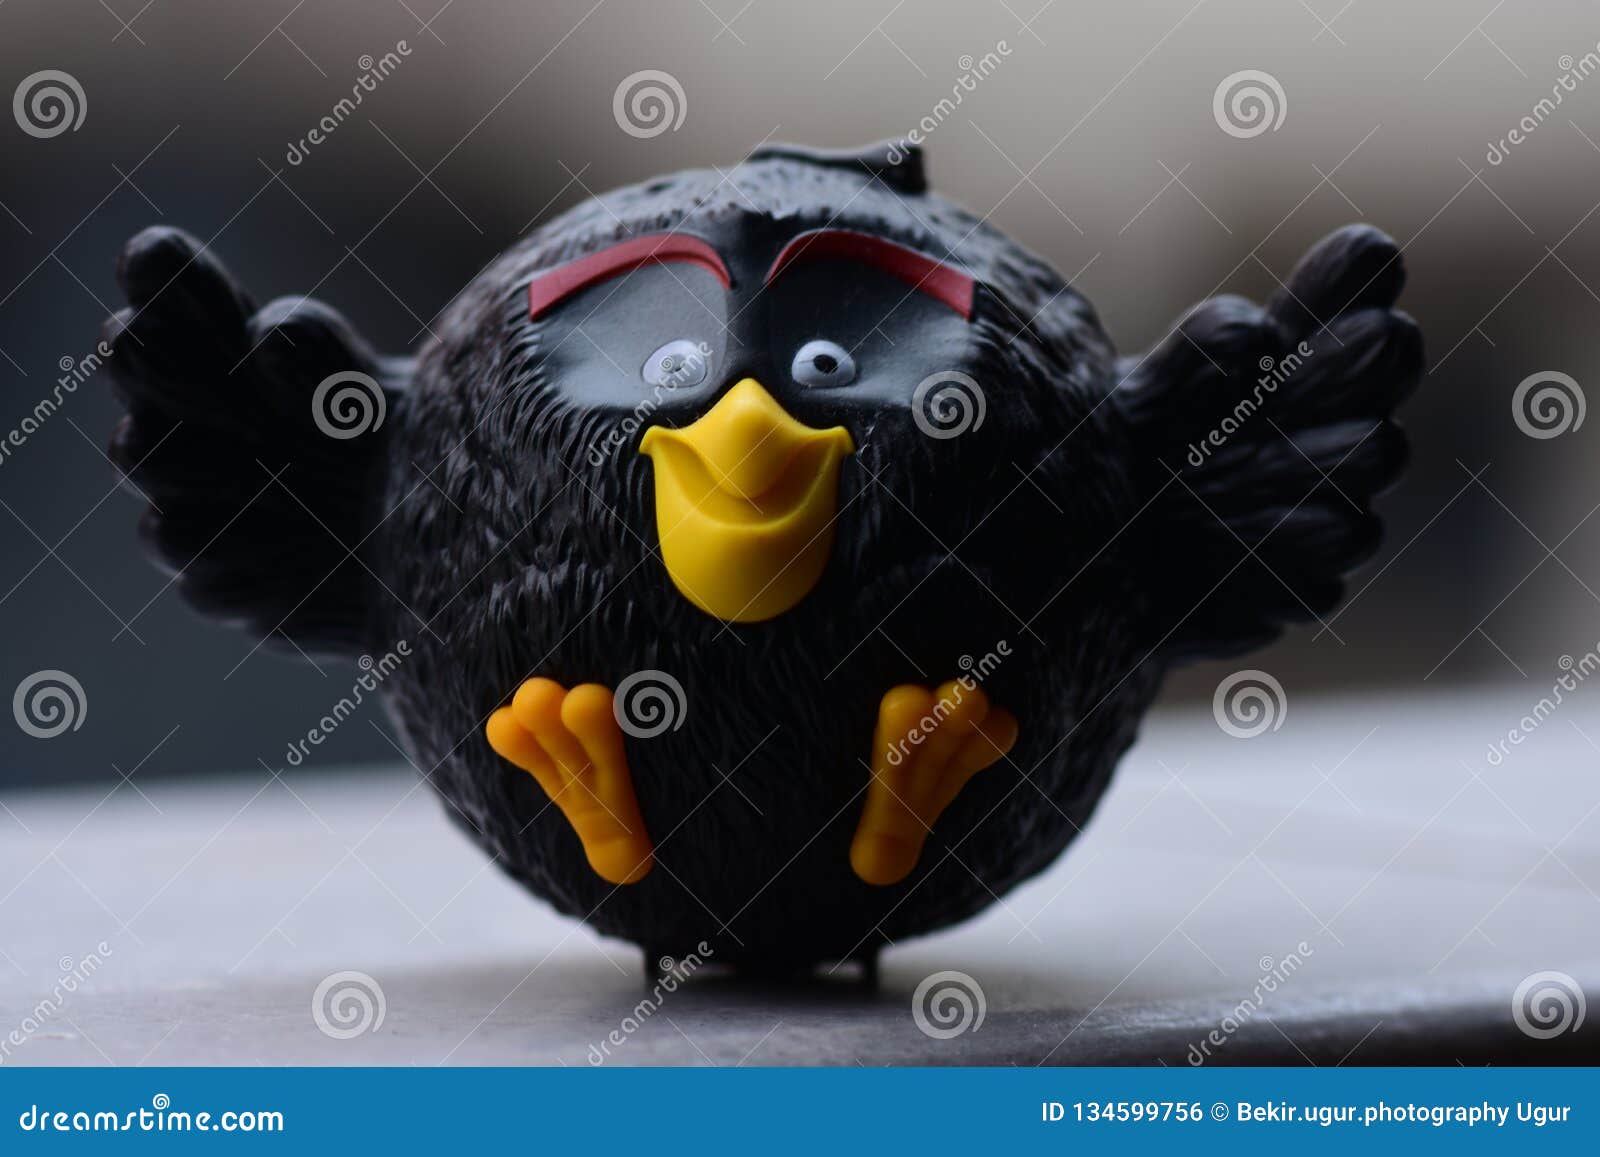 Angry Birds Collectible Black Toy Editorial Photo - Image of cartoon,  bluebird: 134599756